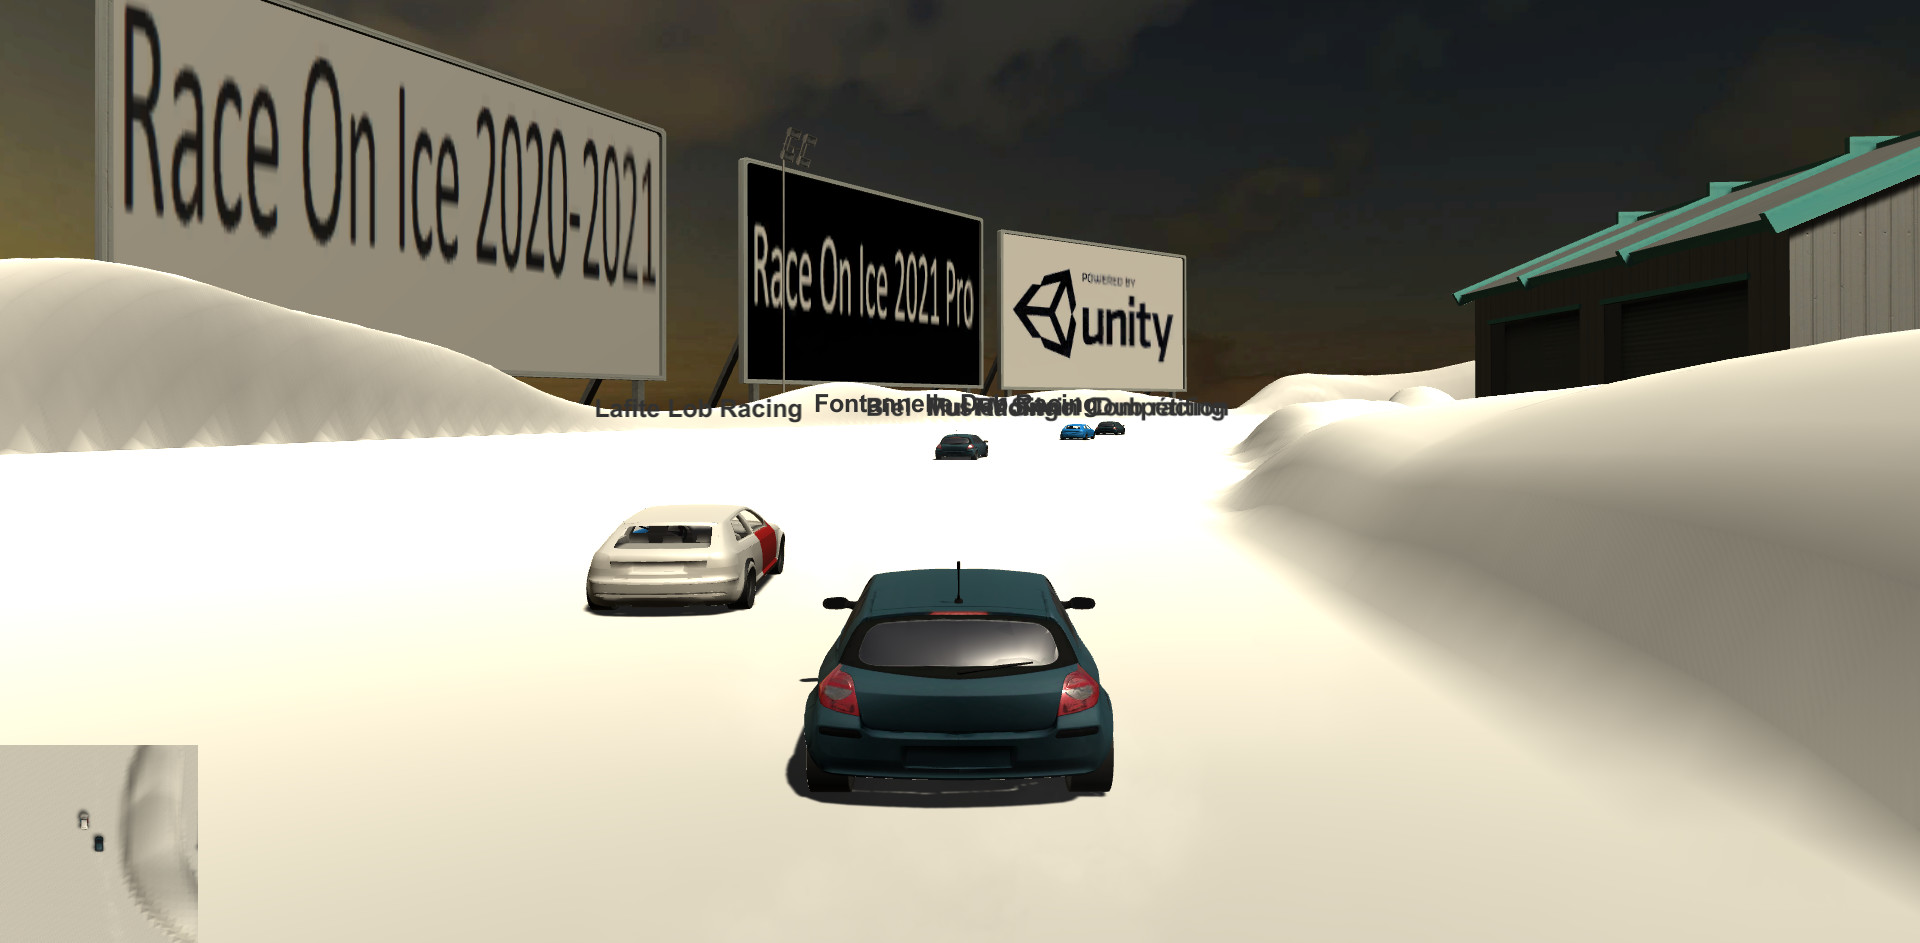 Race On Ice 2021 Pro screenshot